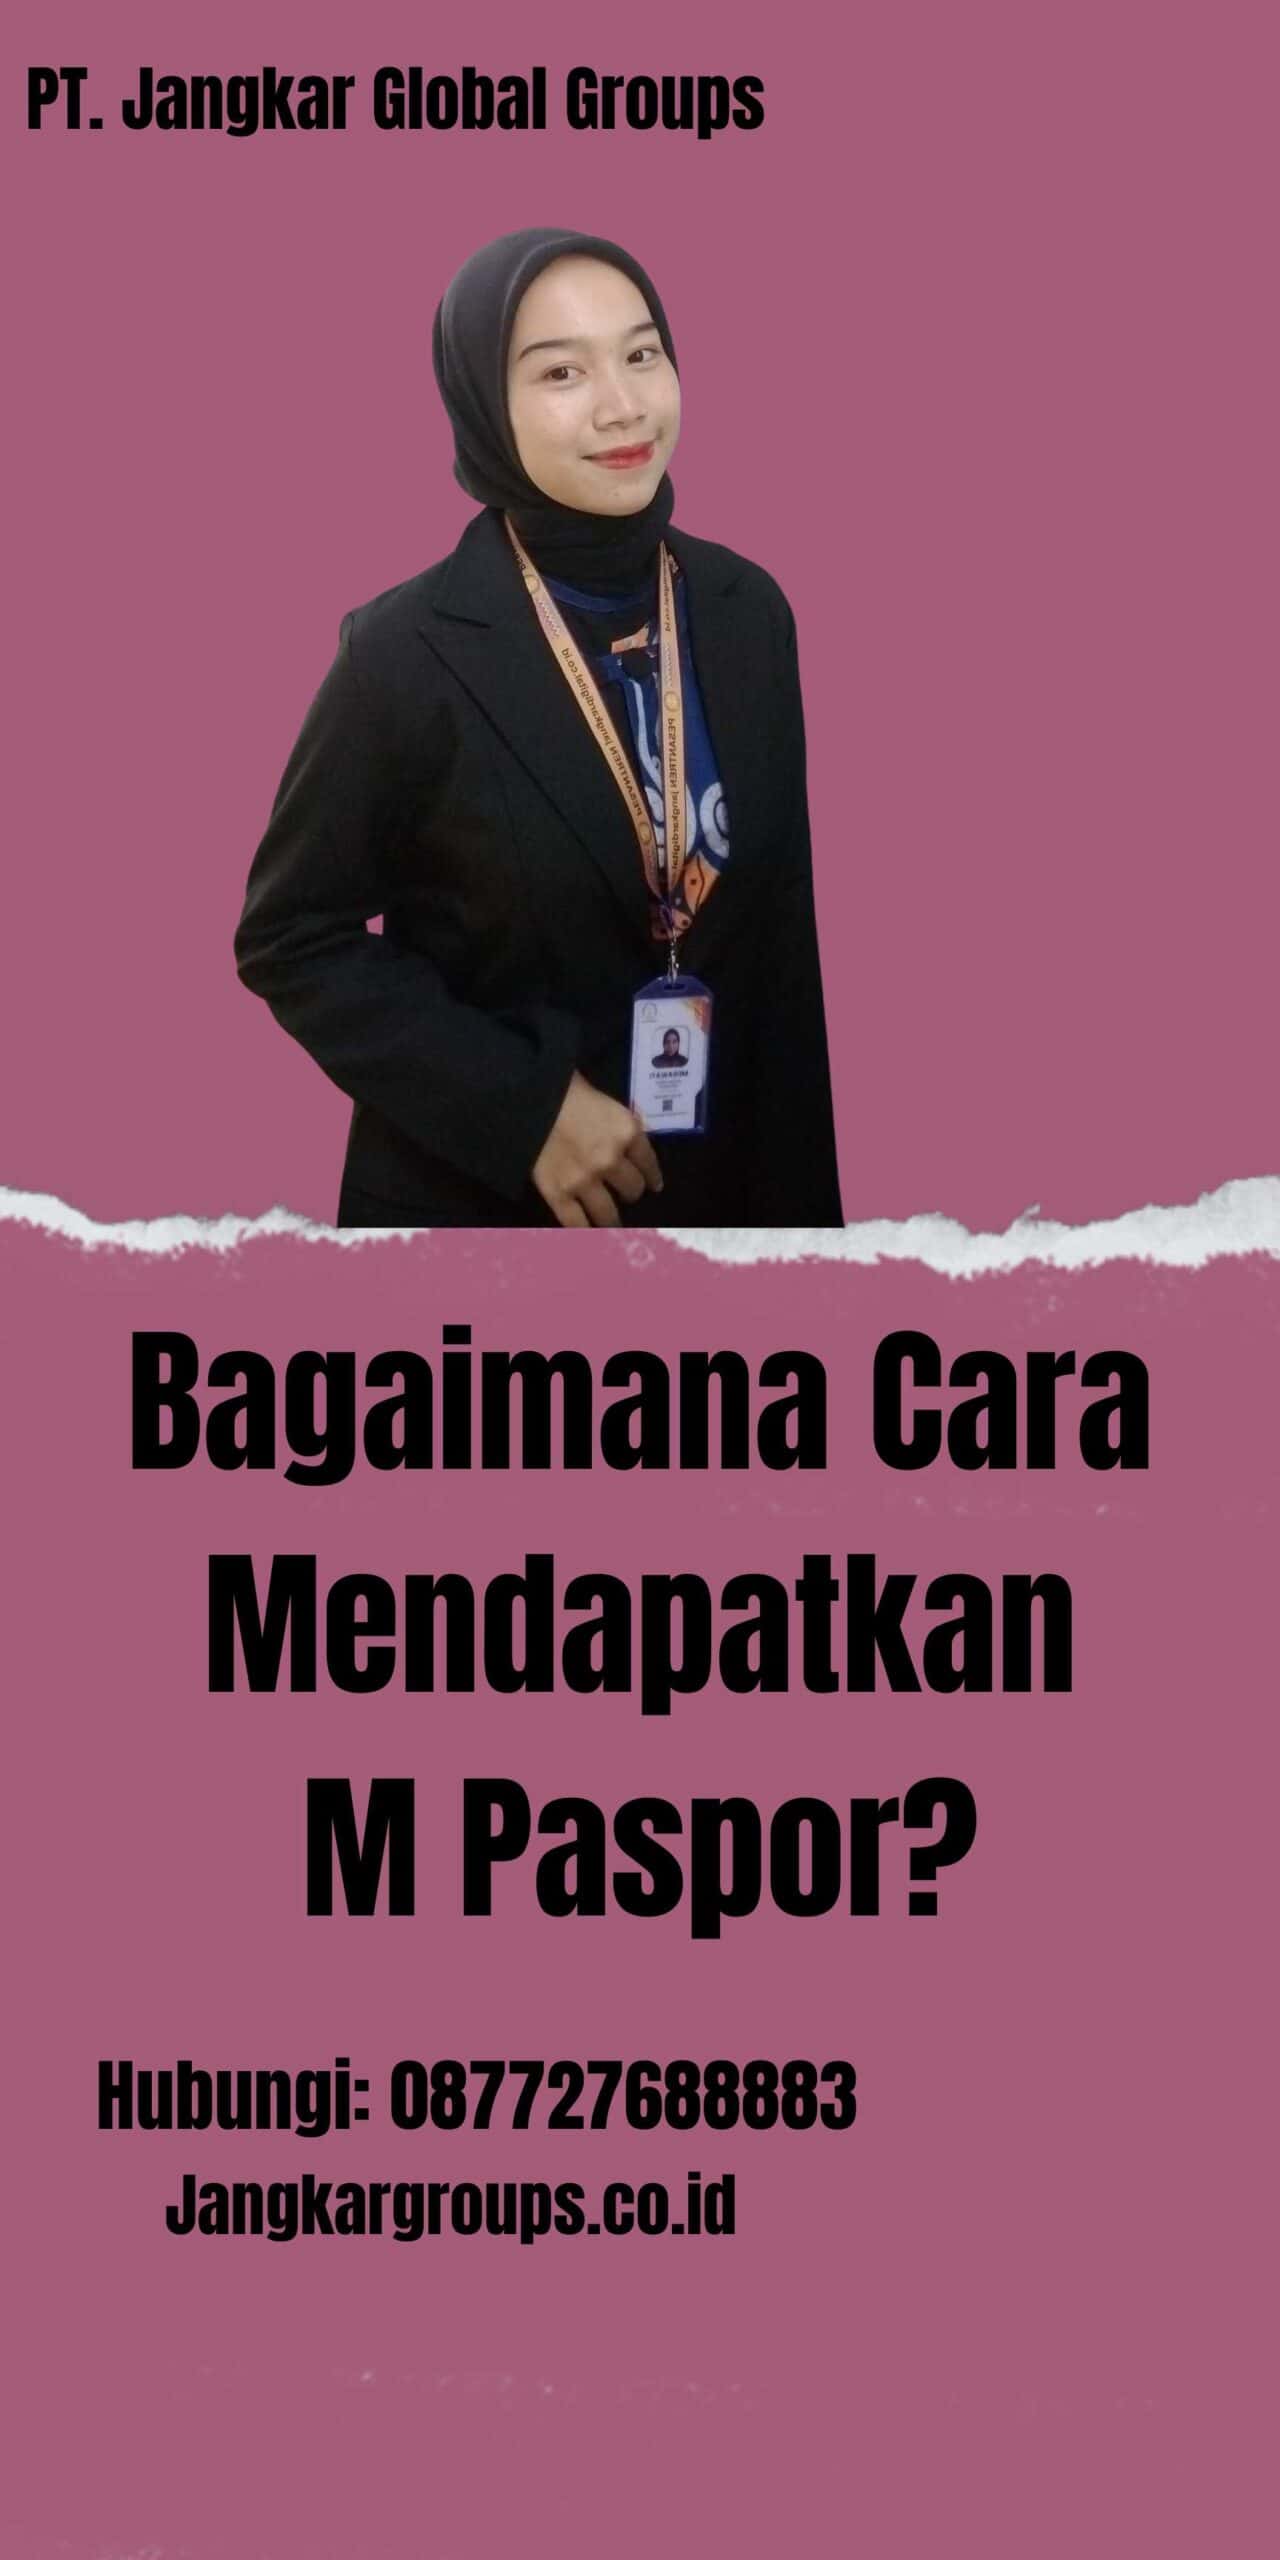 Bagaimana Cara Mendapatkan M Paspor?